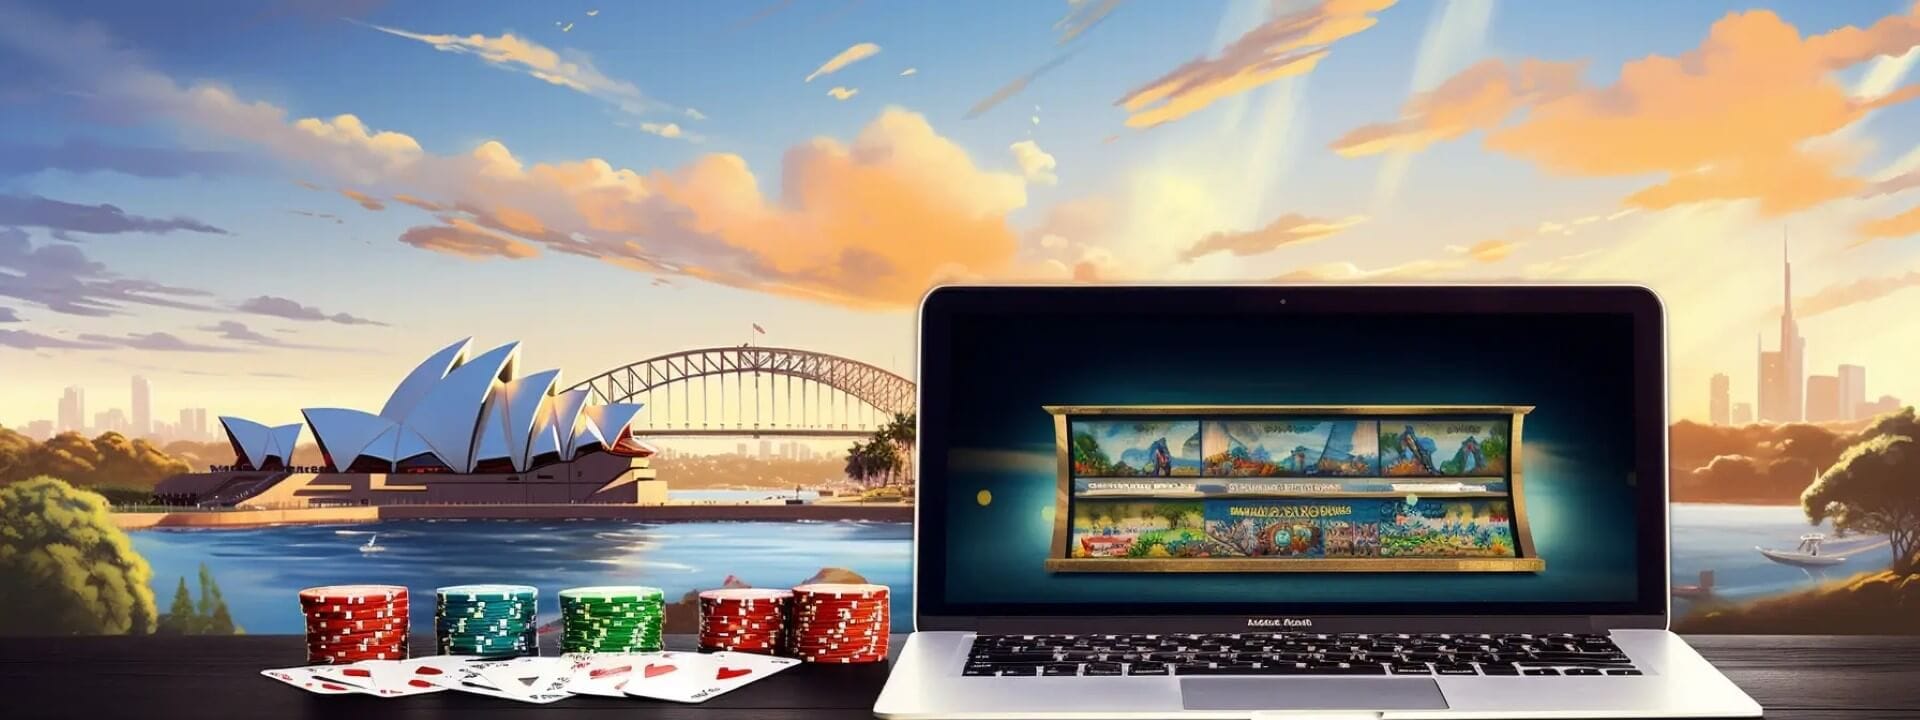 scamming online casinos